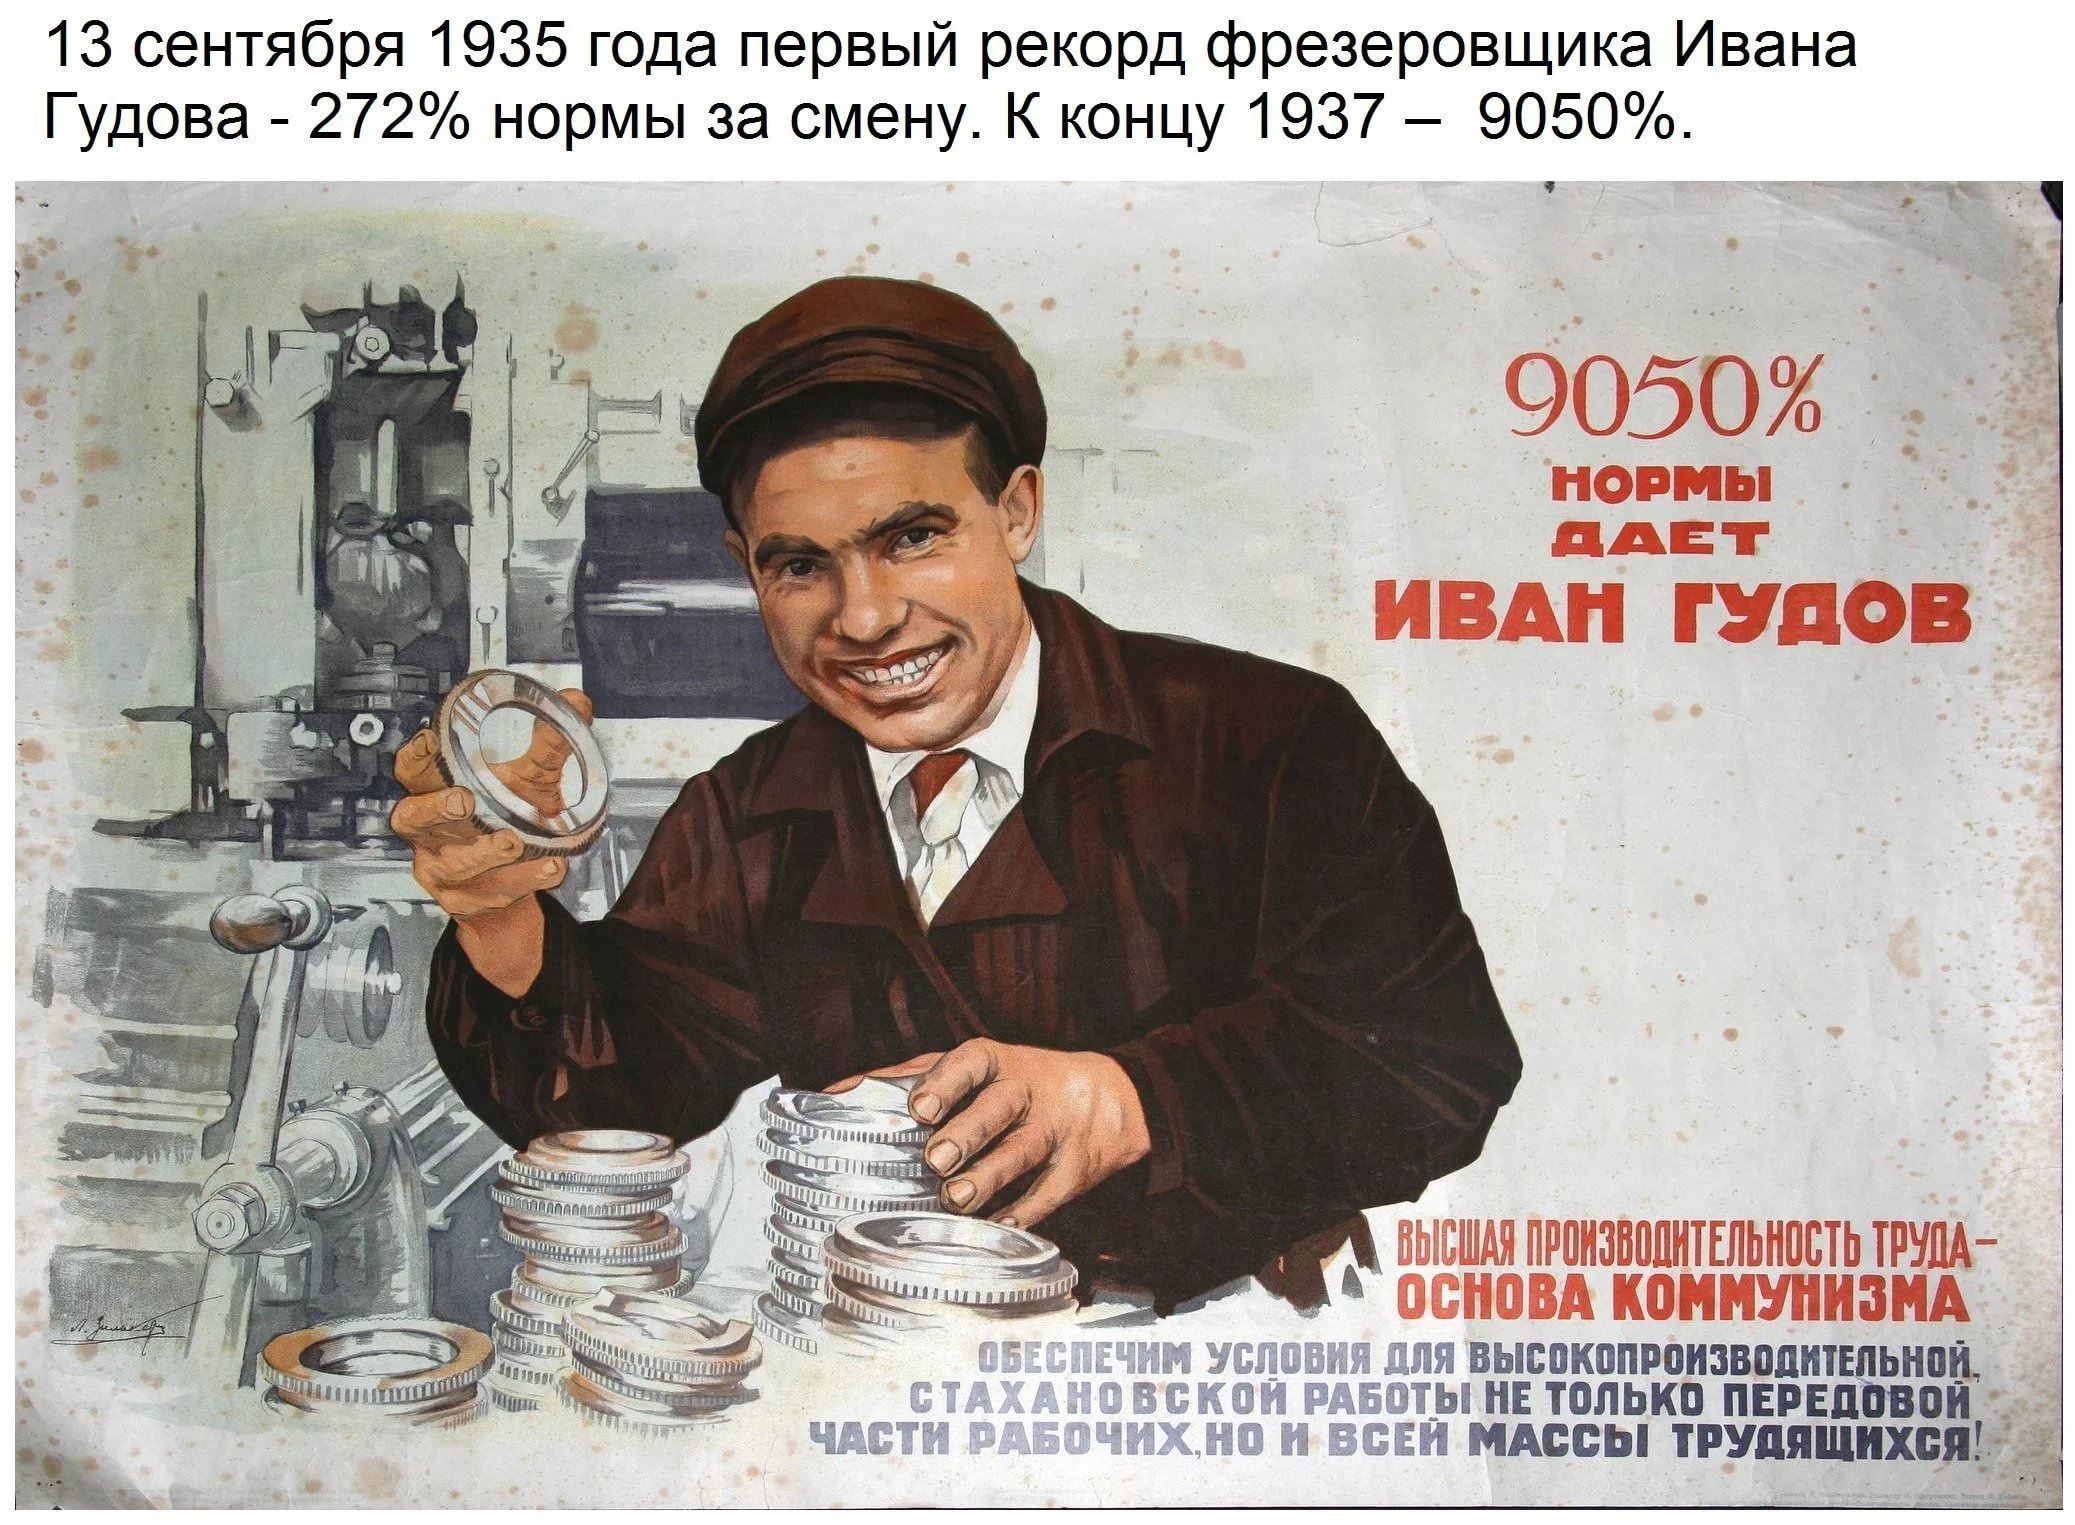 Мастер слоганы. Советские плакаты. Старые советские плакаты. Агитационные плакаты. Советские агитационные плакаты.